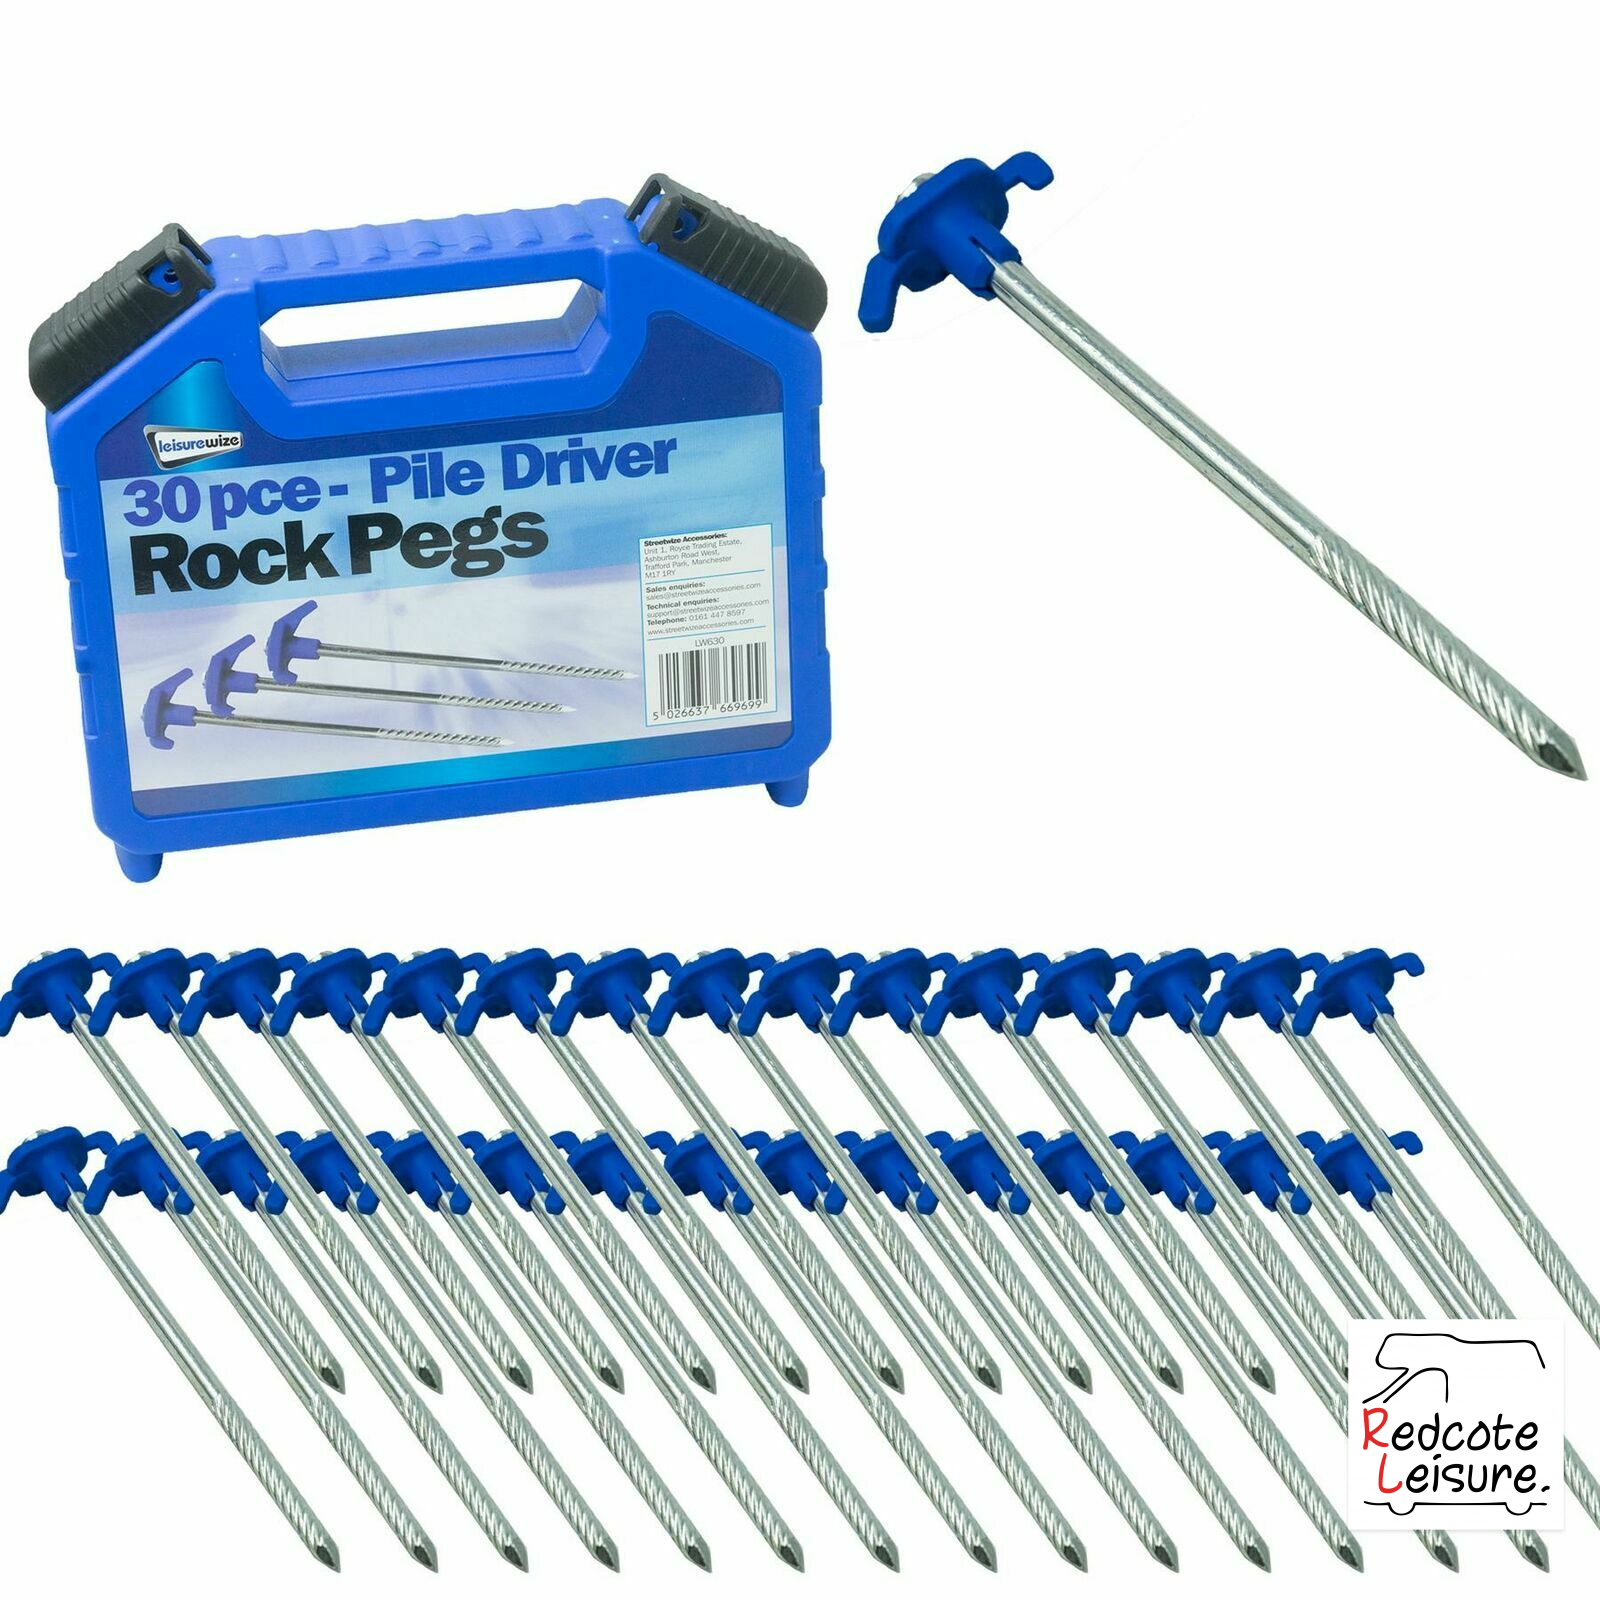 Screw-Thread Peg Hard Ground Twisters with Plastic Handles Leisurewize LW630 30-Piece Pile Driver Rock Peg Set 